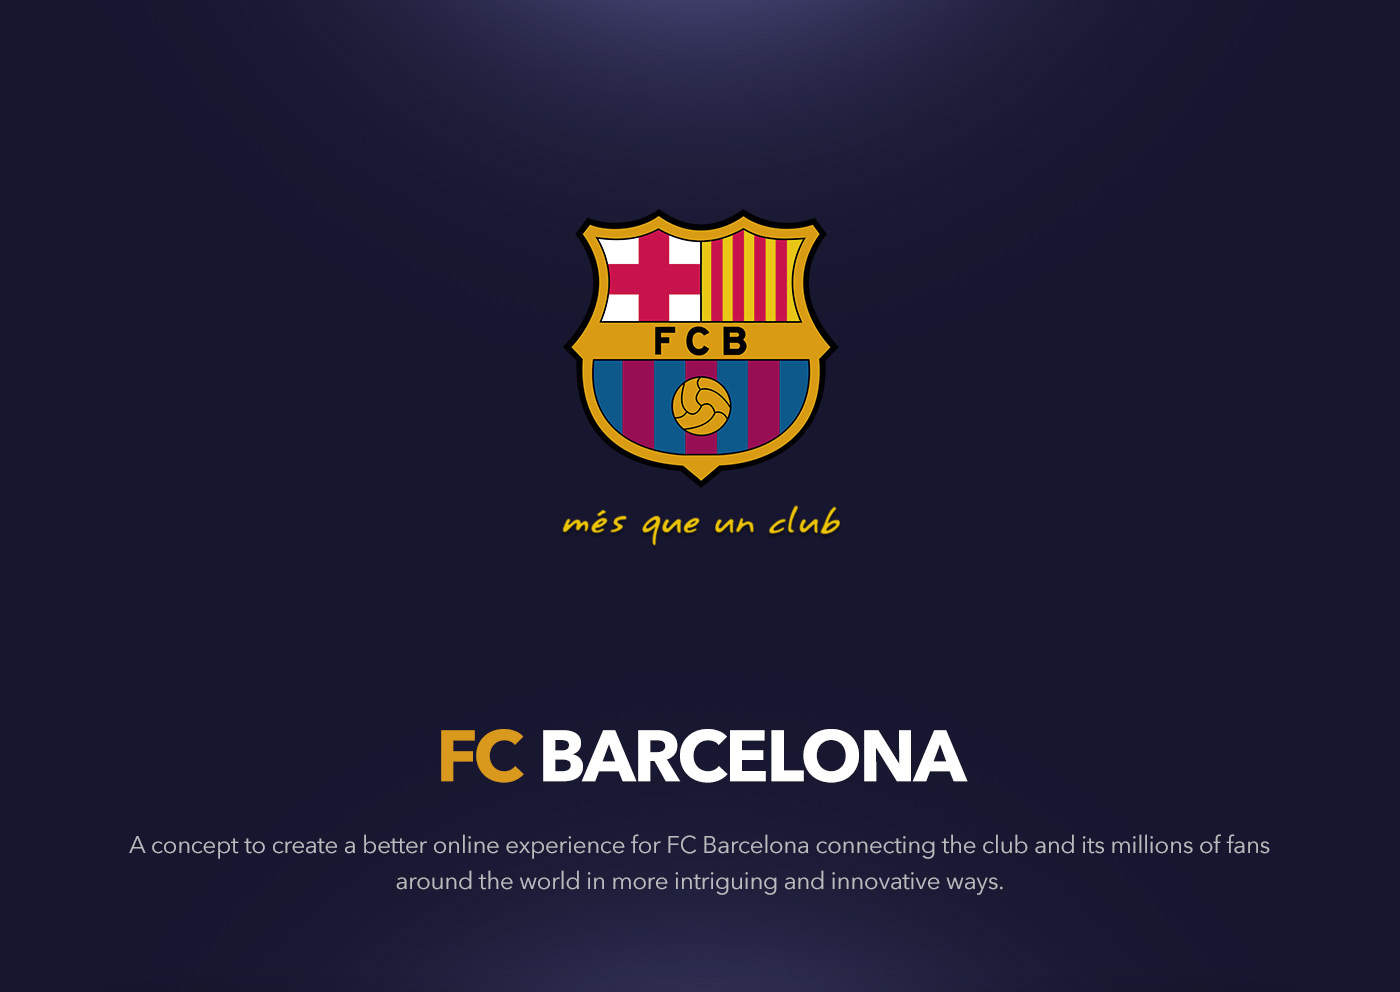 FC Barcelona巴塞罗那足球俱乐部概念网页设计